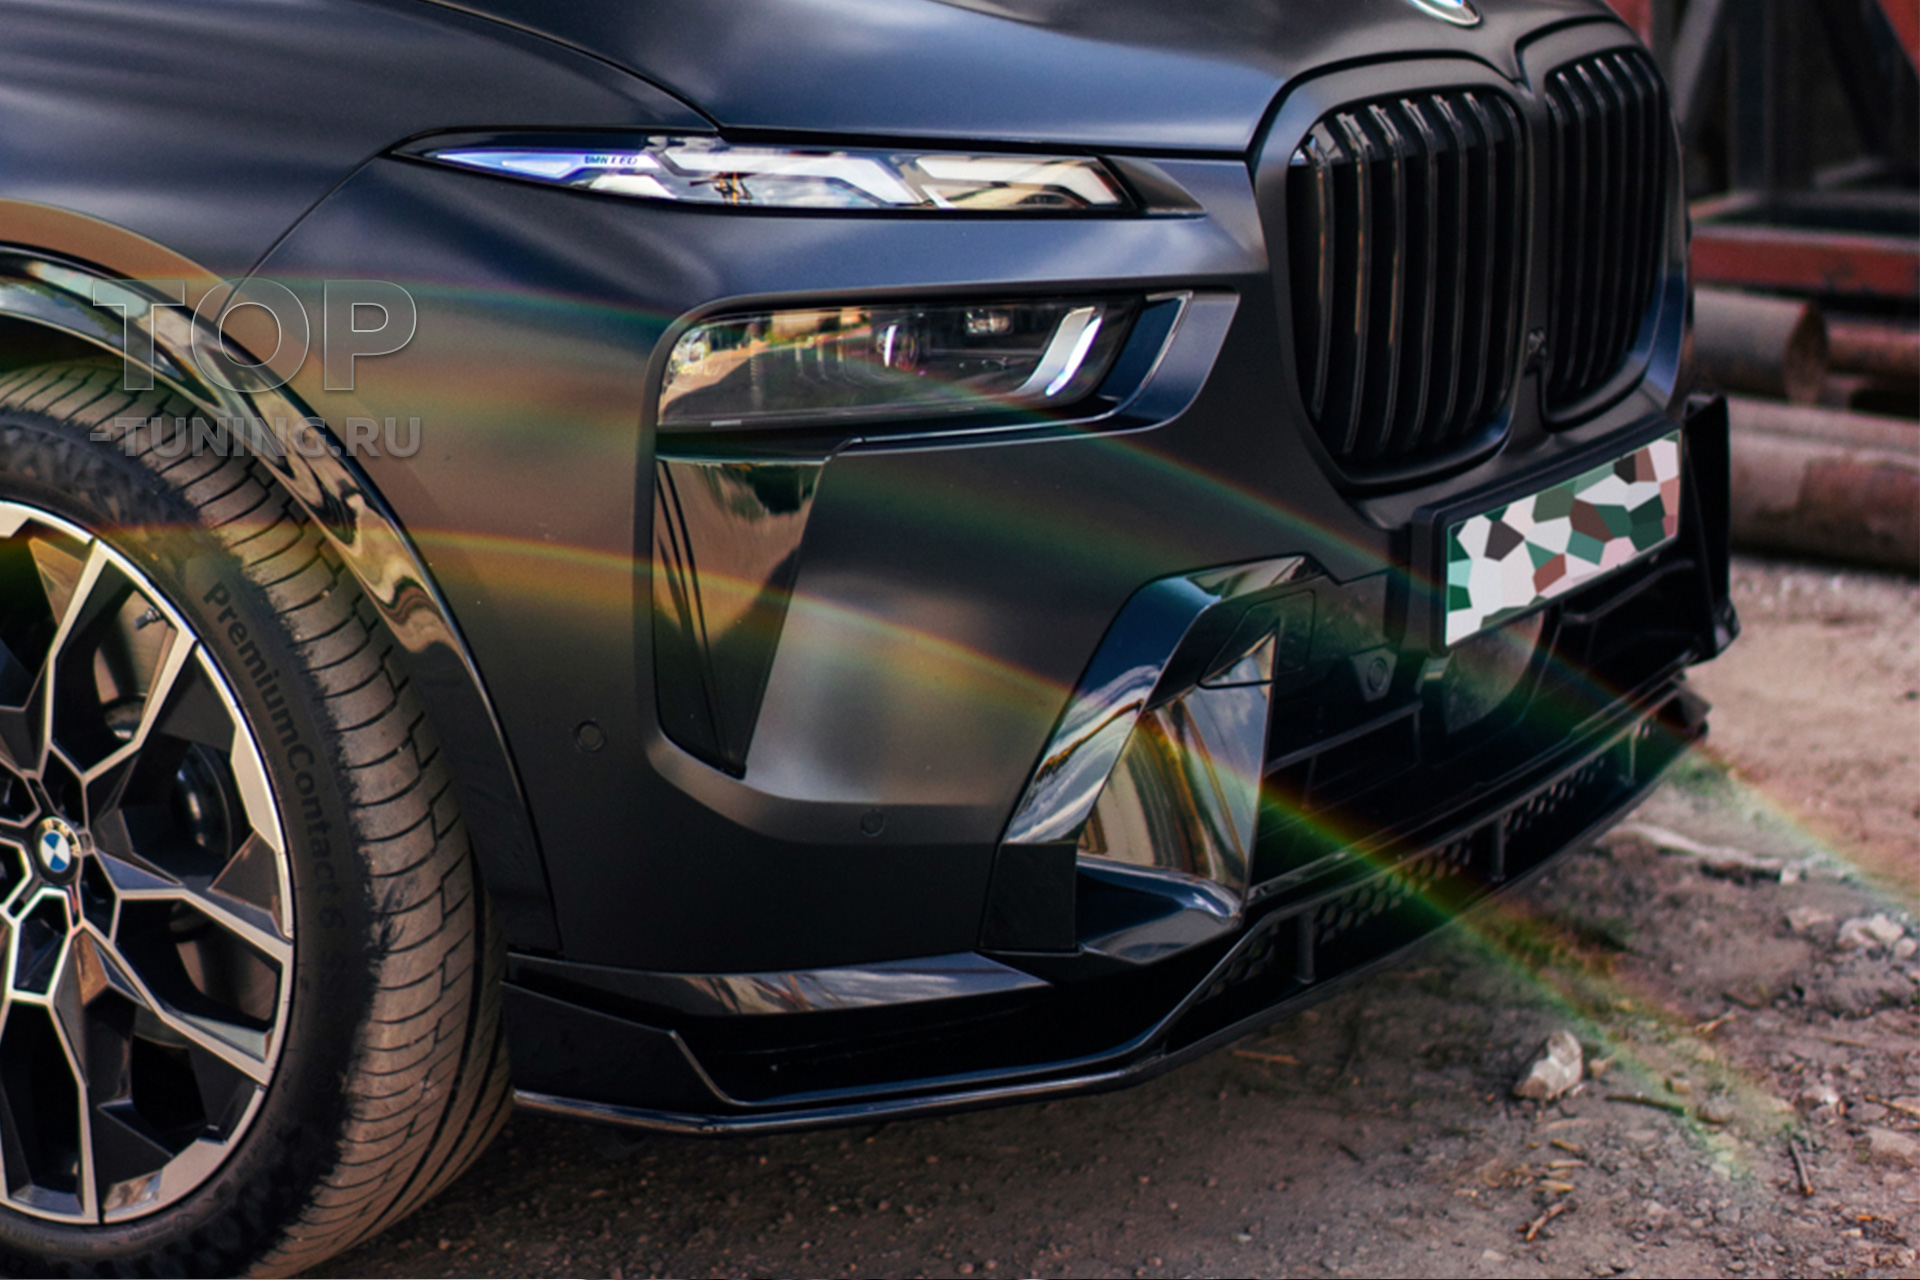 Губа для переднего бампера BMW X7 G07. Технические характеристики и фото